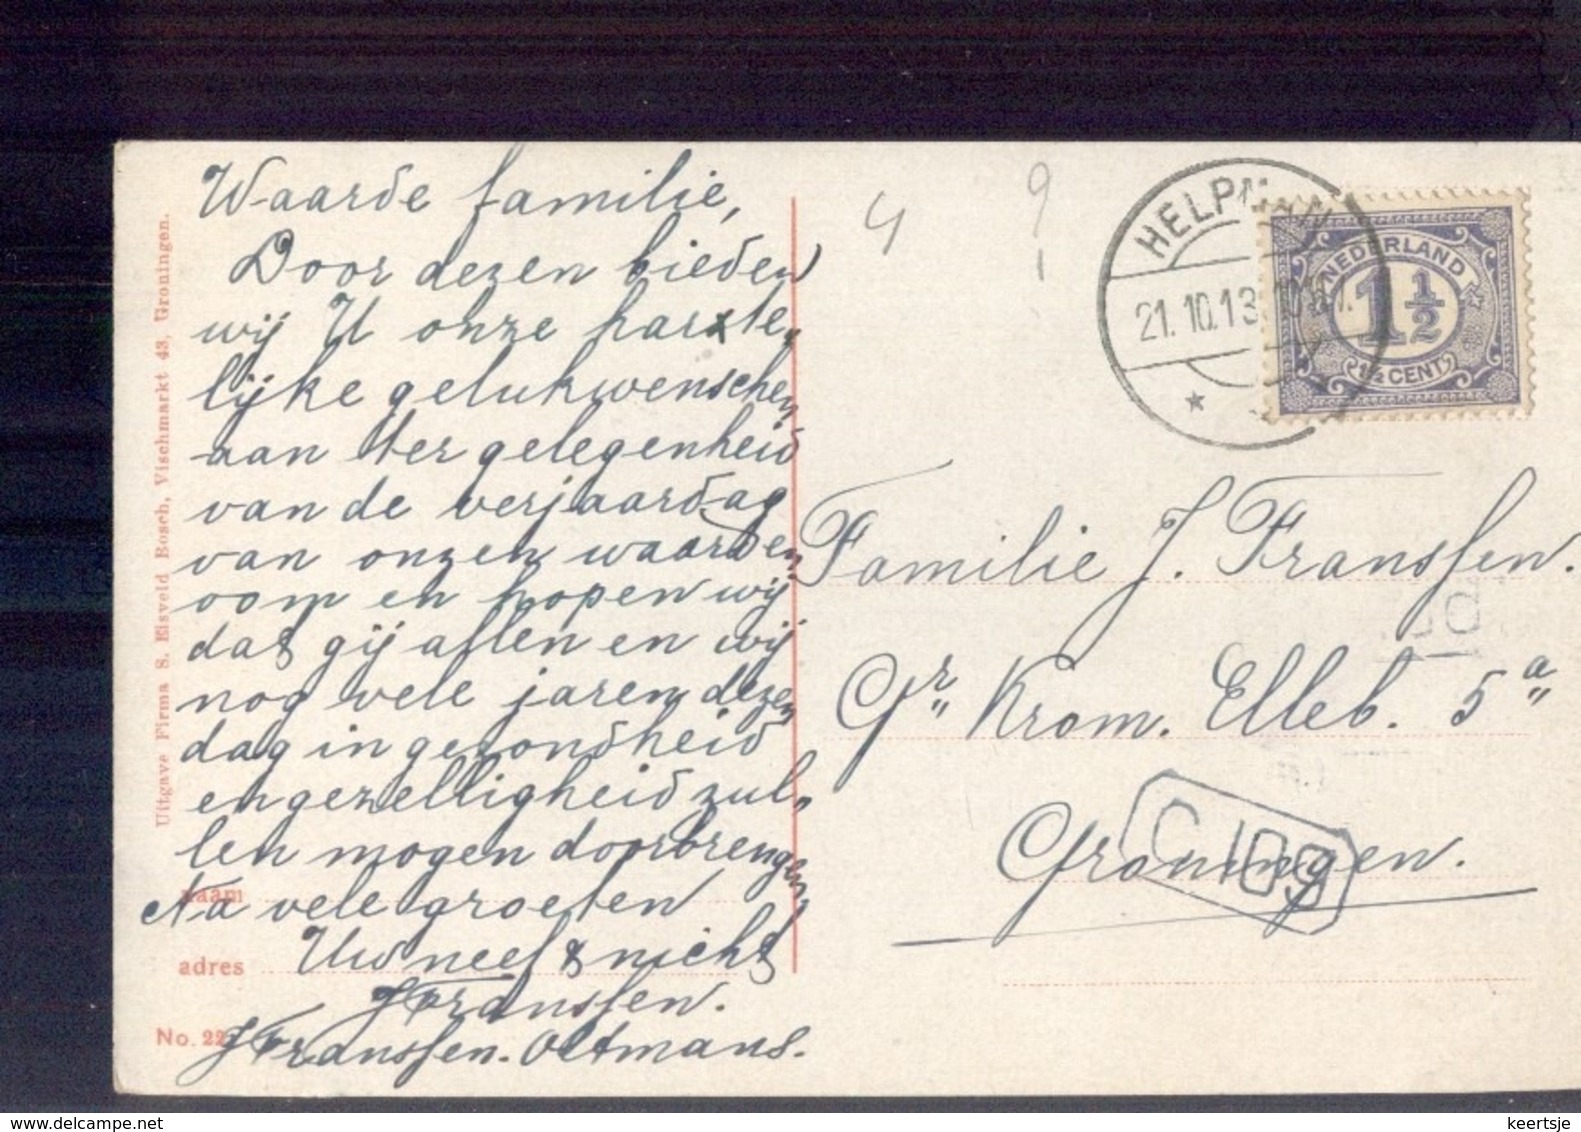 Helpman - Langebalk - 1913 - Postal History